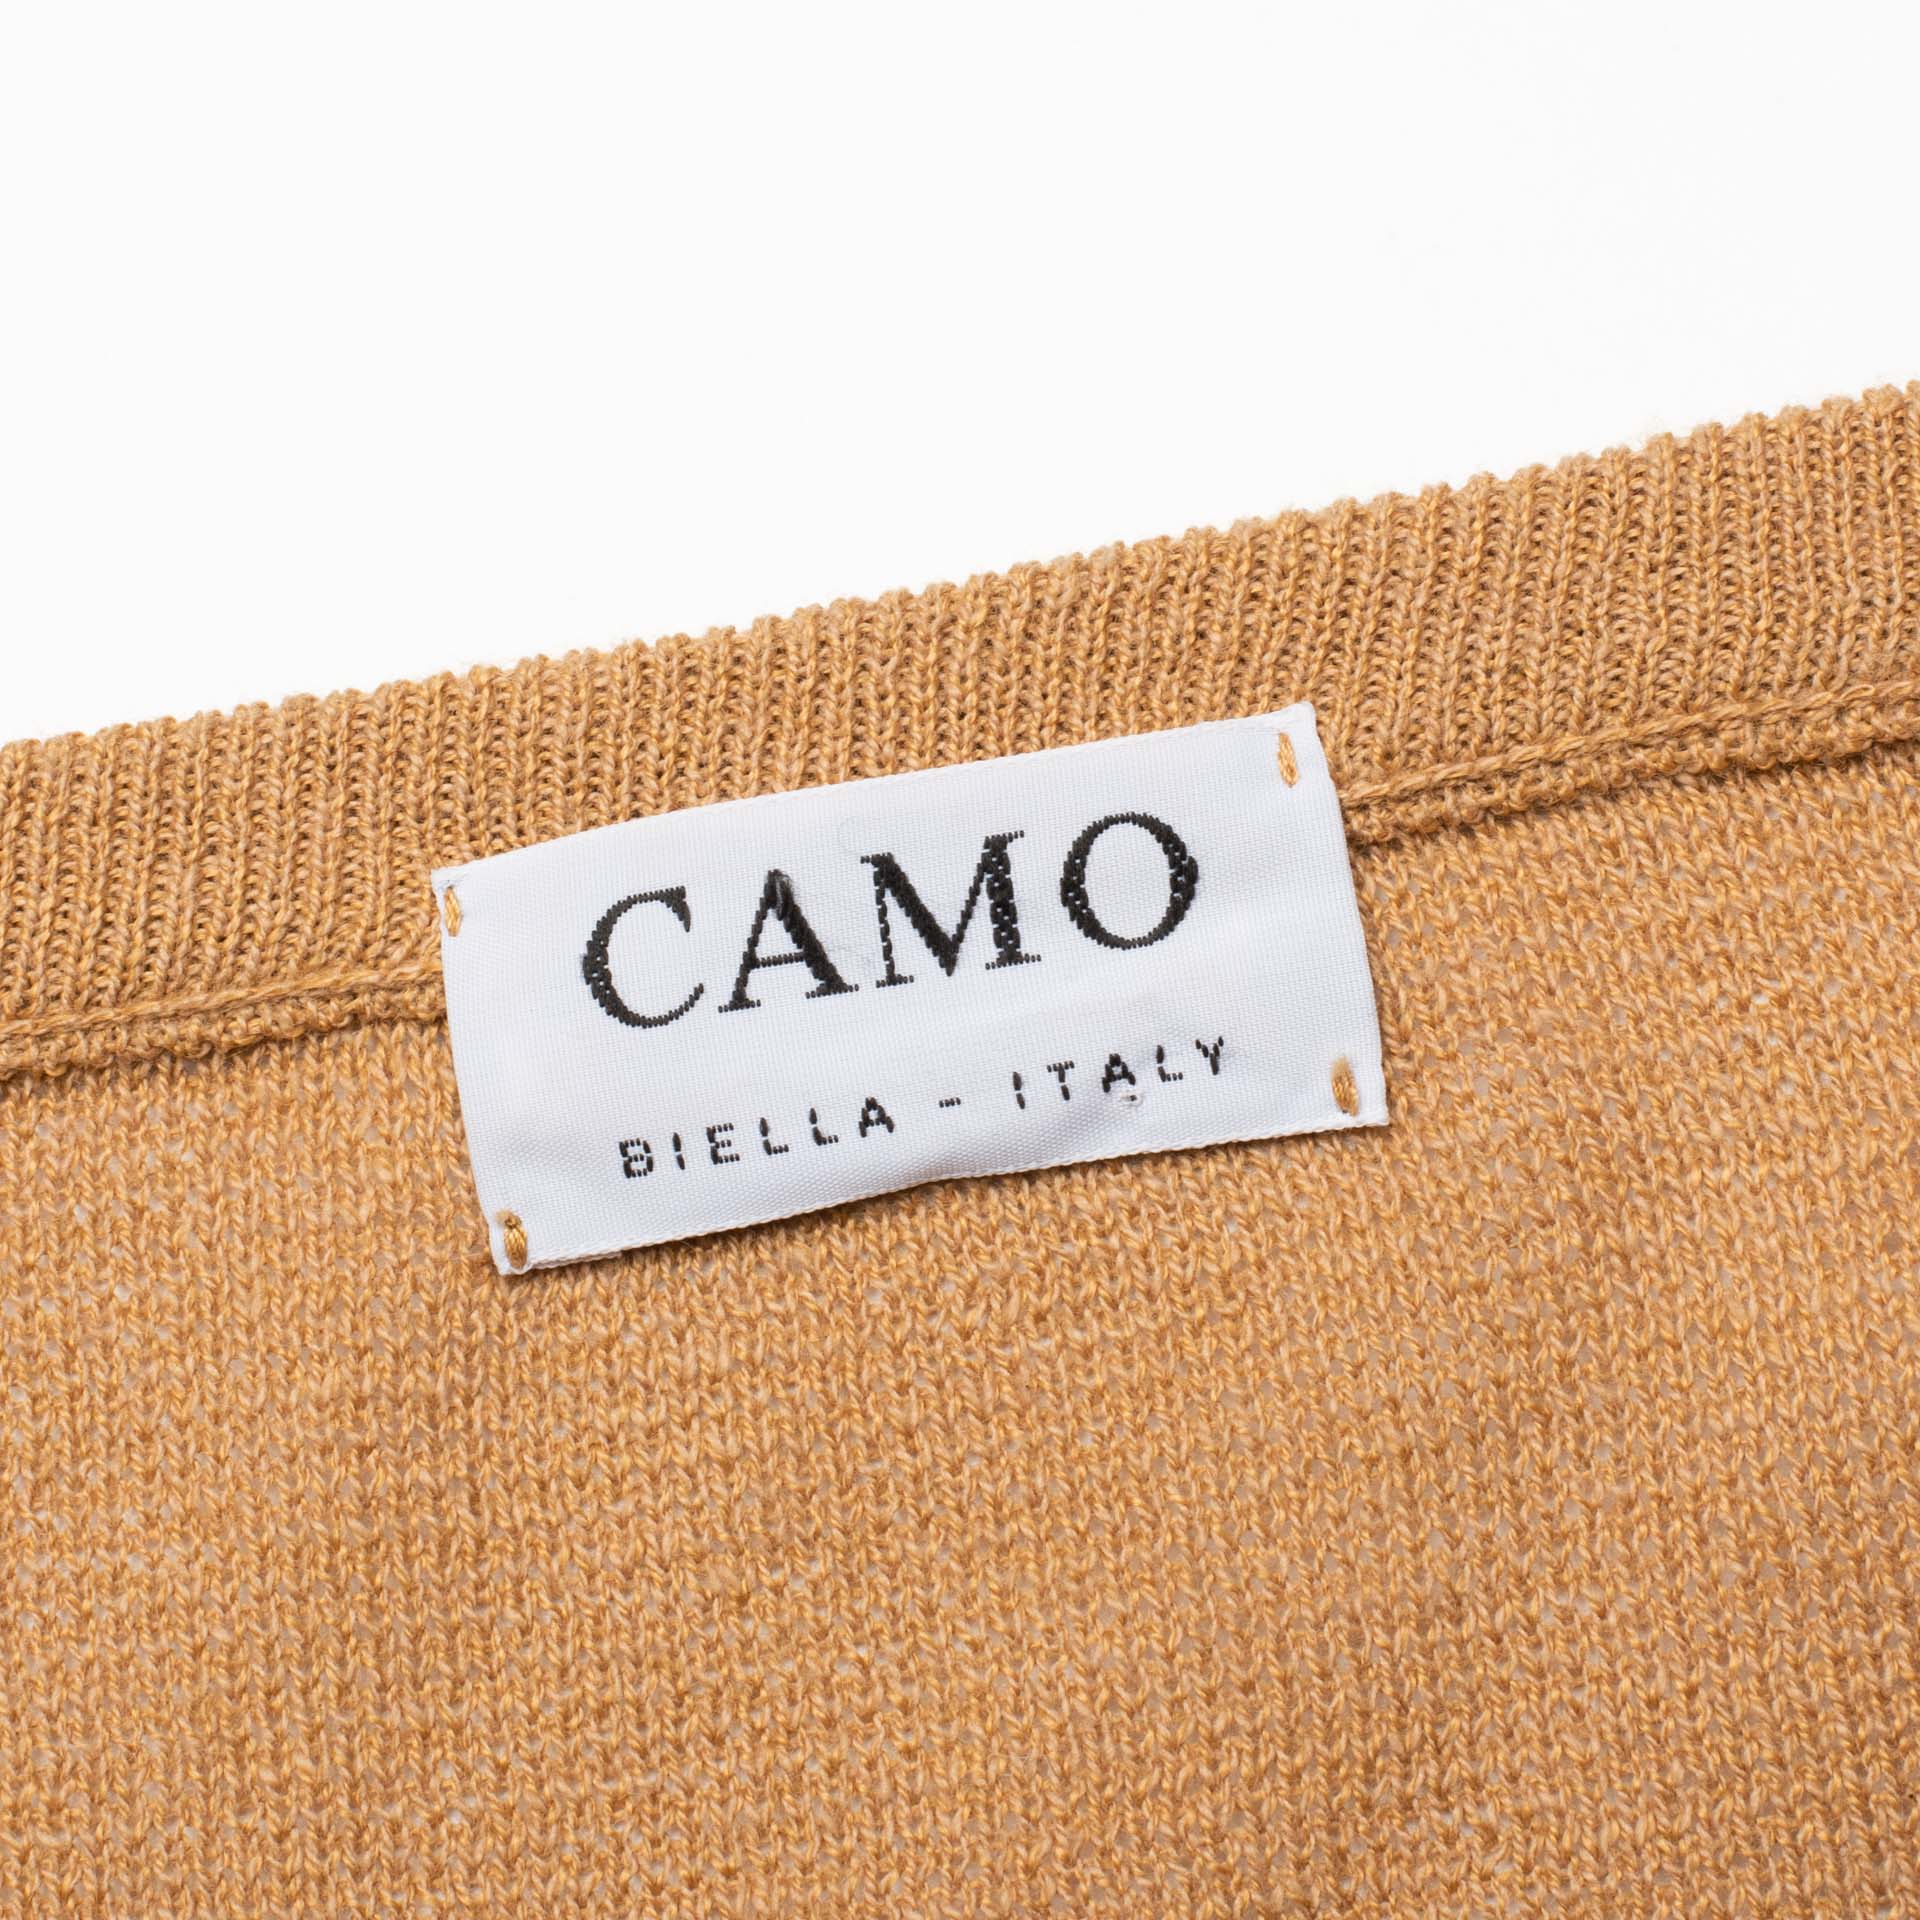 CAMO Biella Italy Tan Cotton Blend Crewneck Ribbed Sweater EU 50 NEW US M CAMO